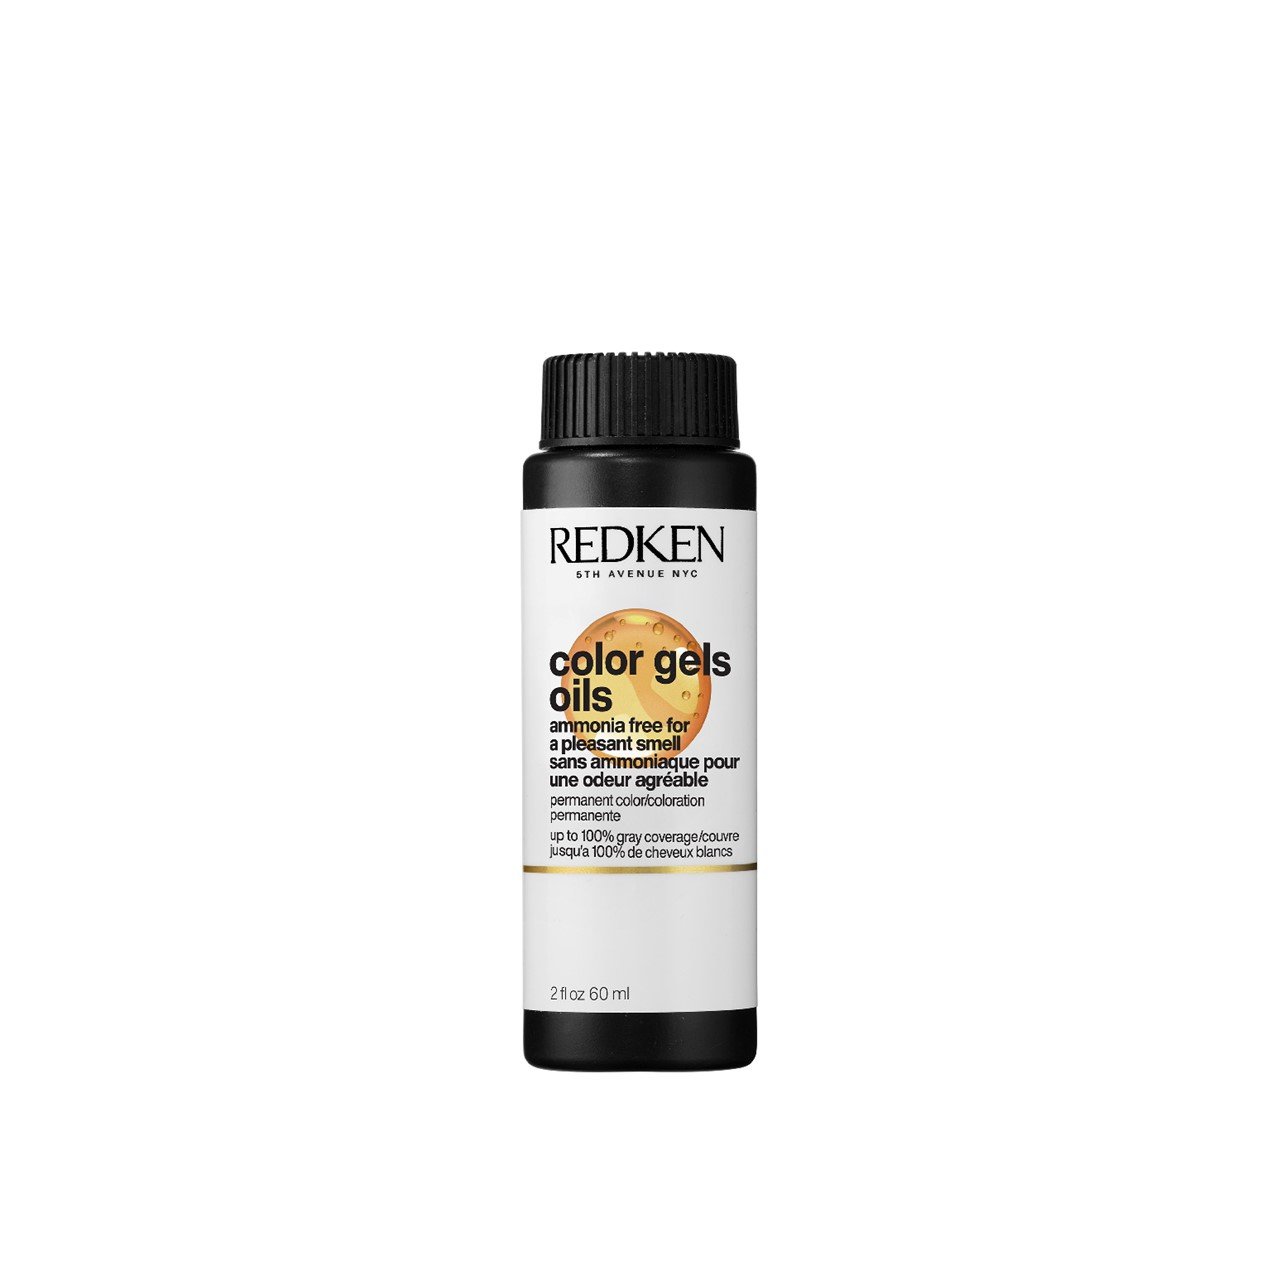 Redken Color Gels Oils 10NA Marble Permanent Hair Dye 60ml (2.03 fl oz)